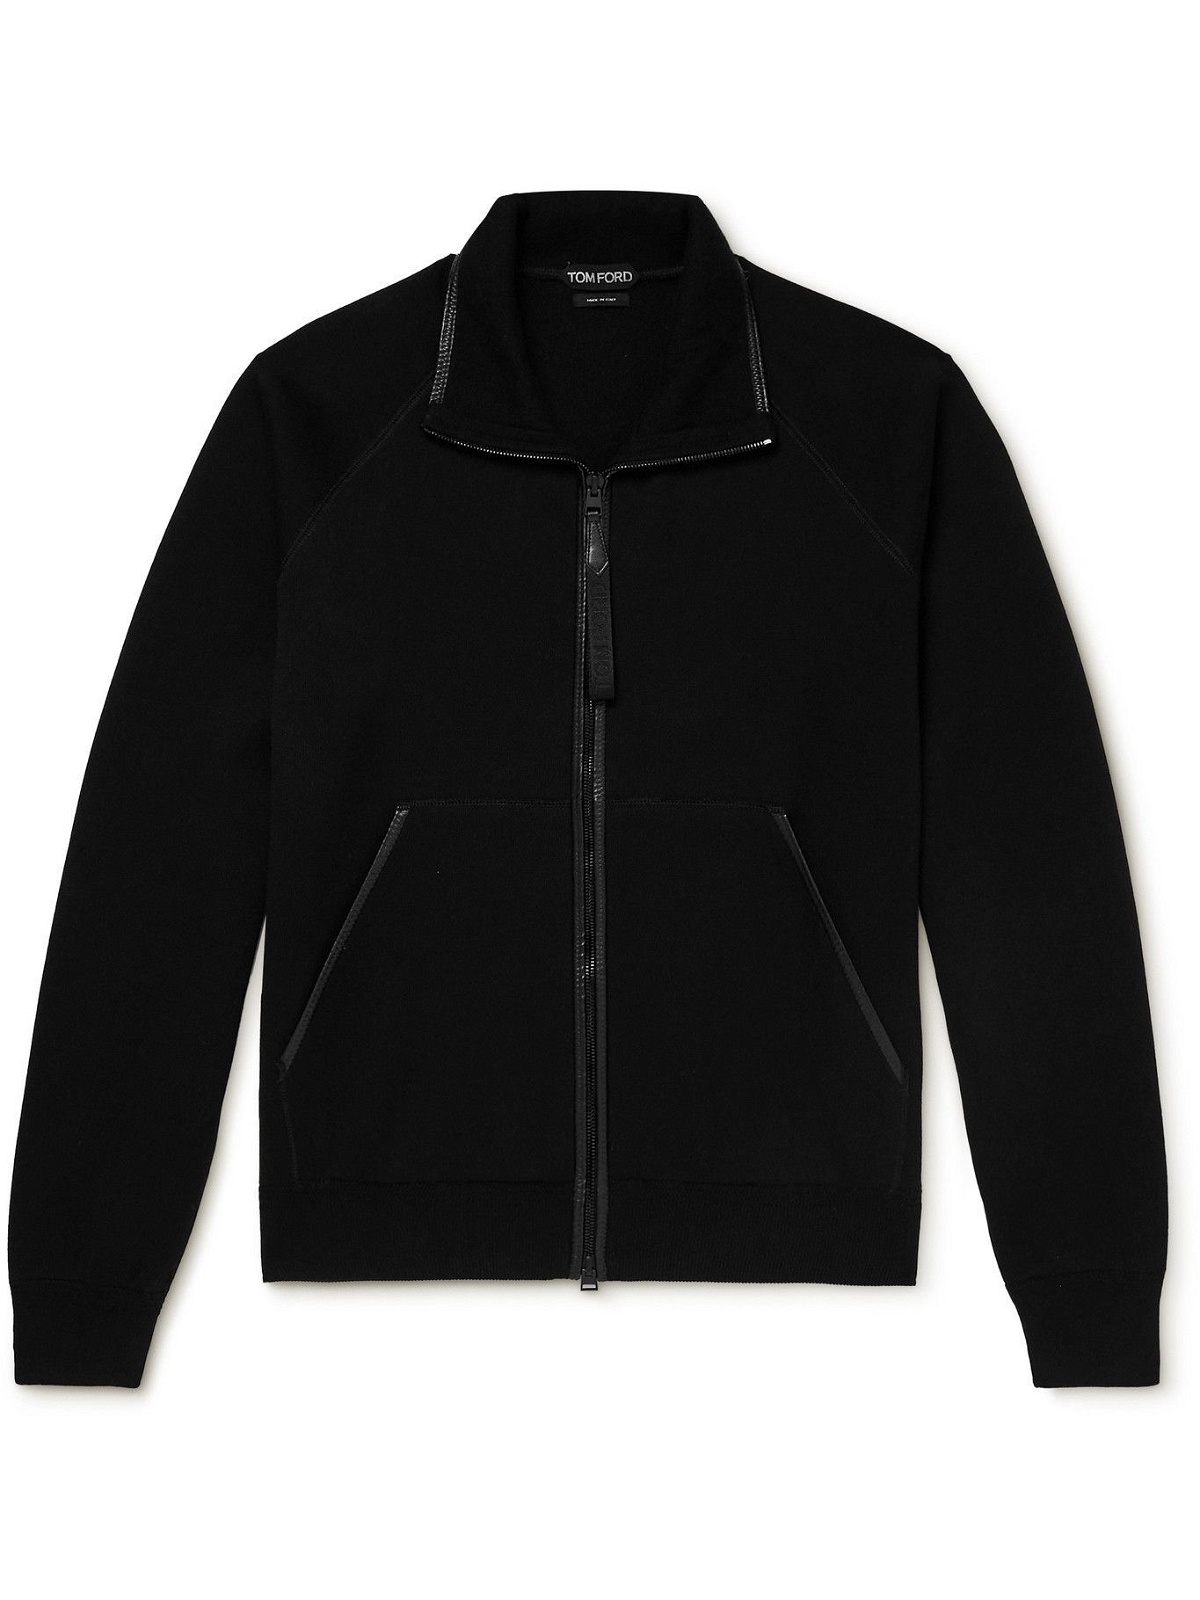 Photo: TOM FORD - Leather-Trimmed Cotton-Blend Zip-Up Sweatshirt - Black